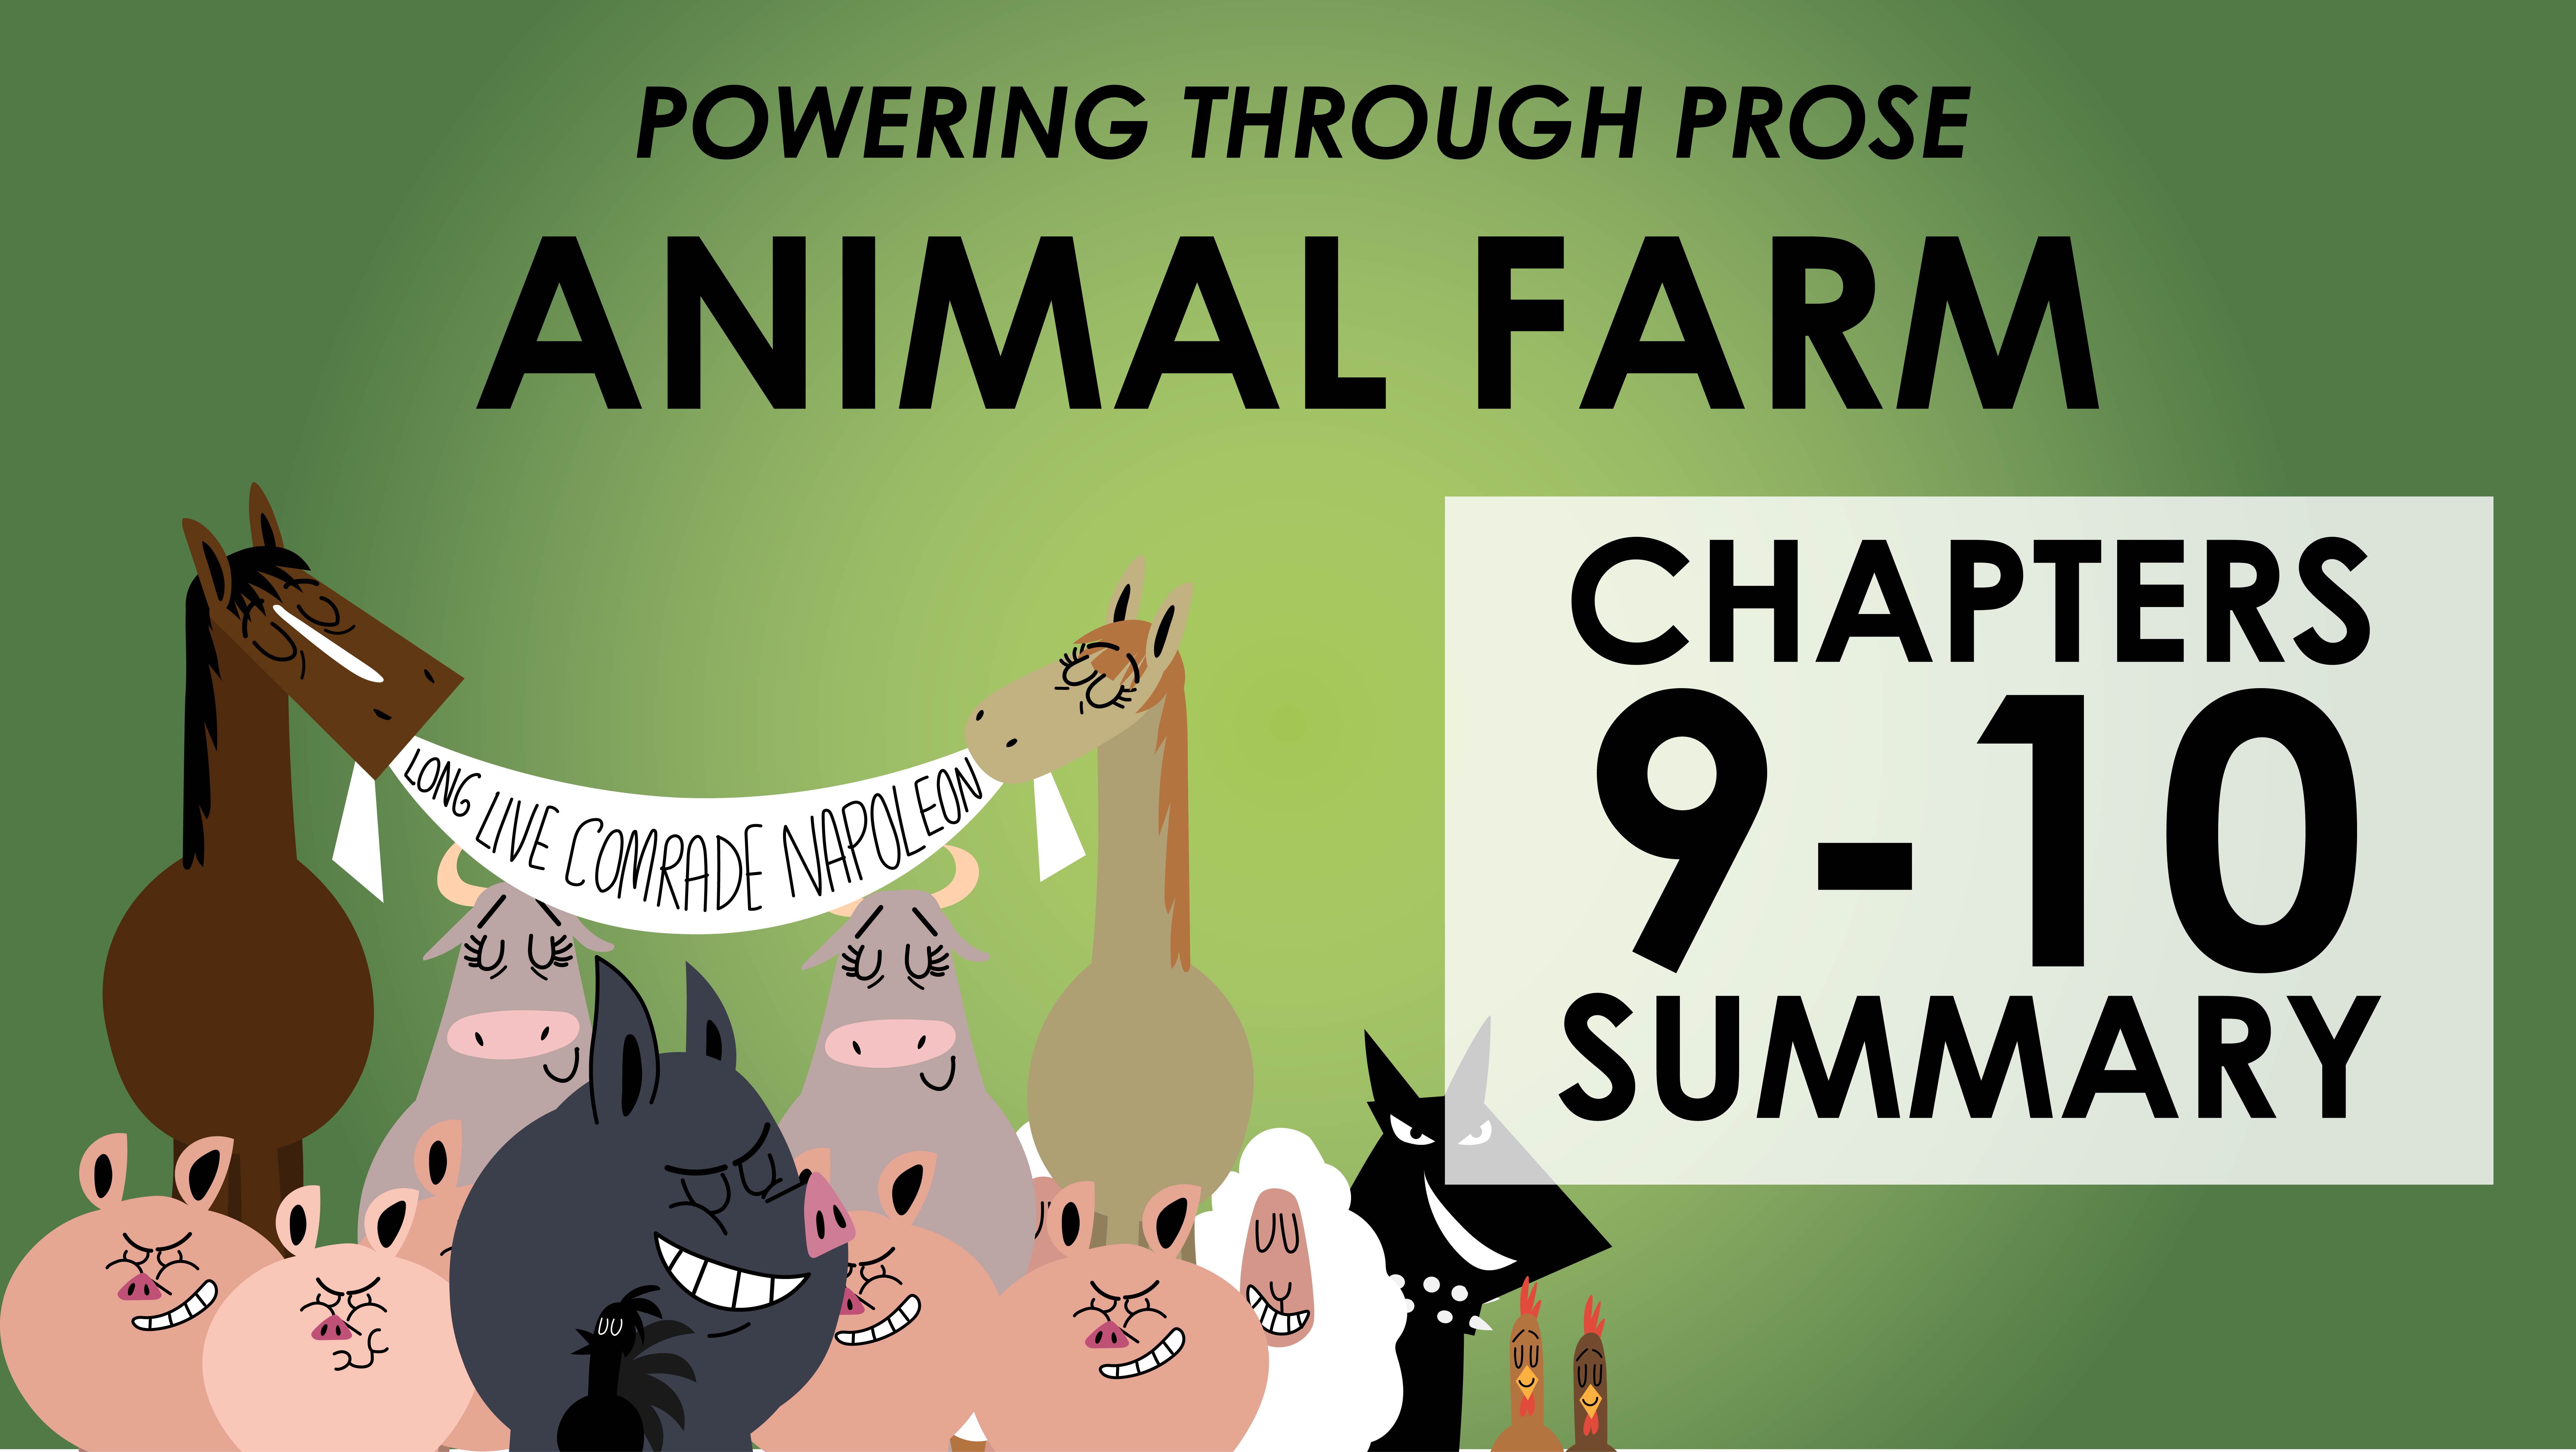 Animal Farm - George Orwell - Chapters 9-10 Summary - Powering Through  Prose Series